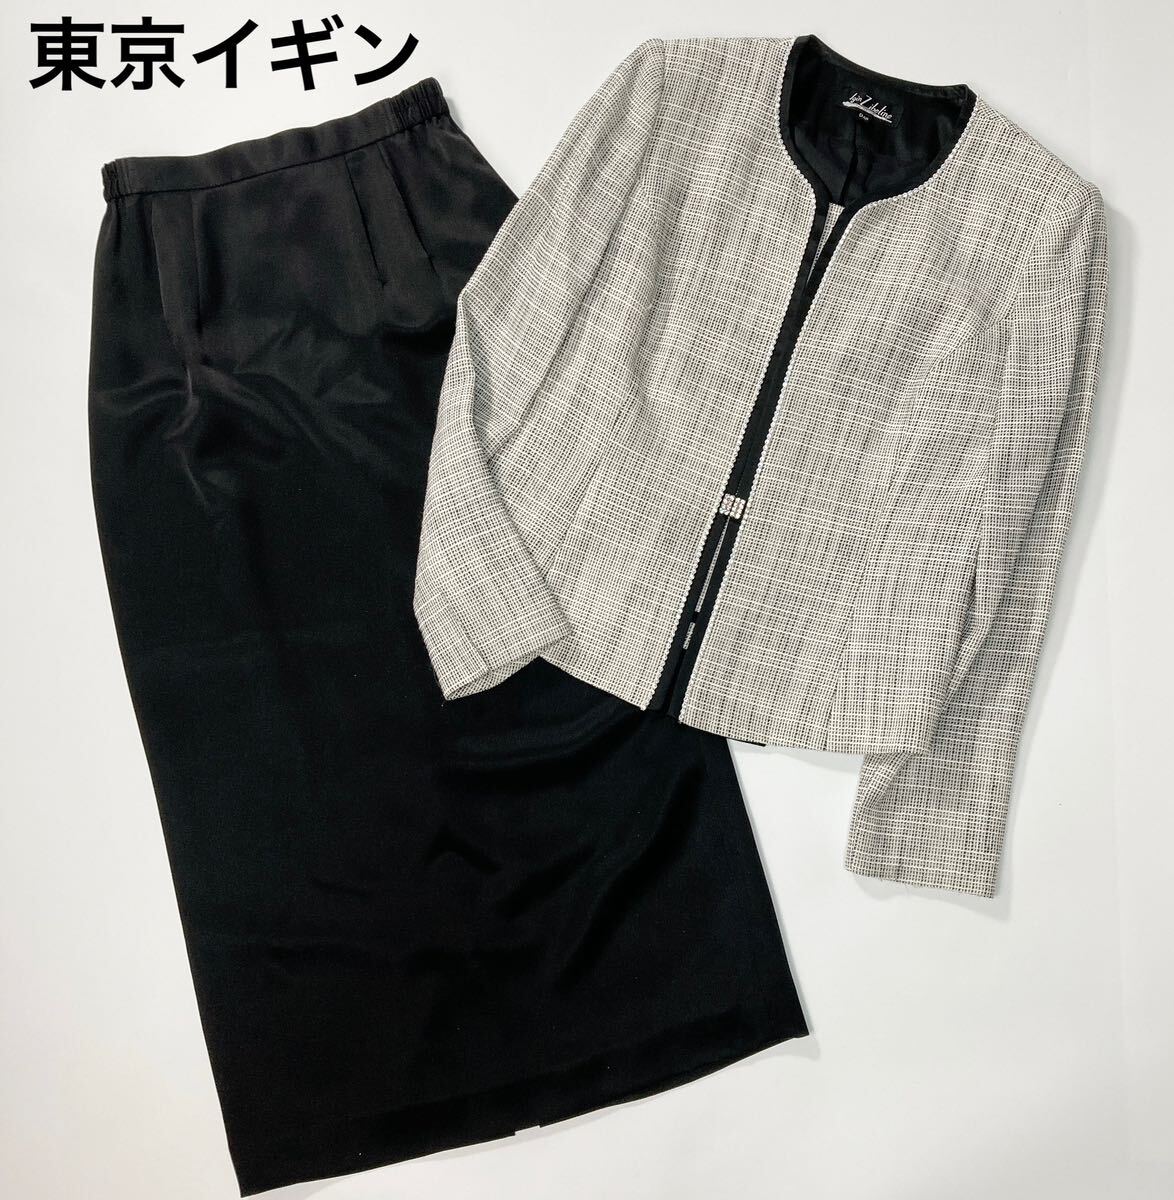 igini silver Tokyo i silver Zibeline setup suit no color jacket skirt rhinestone 9 number lady's M B42416-144